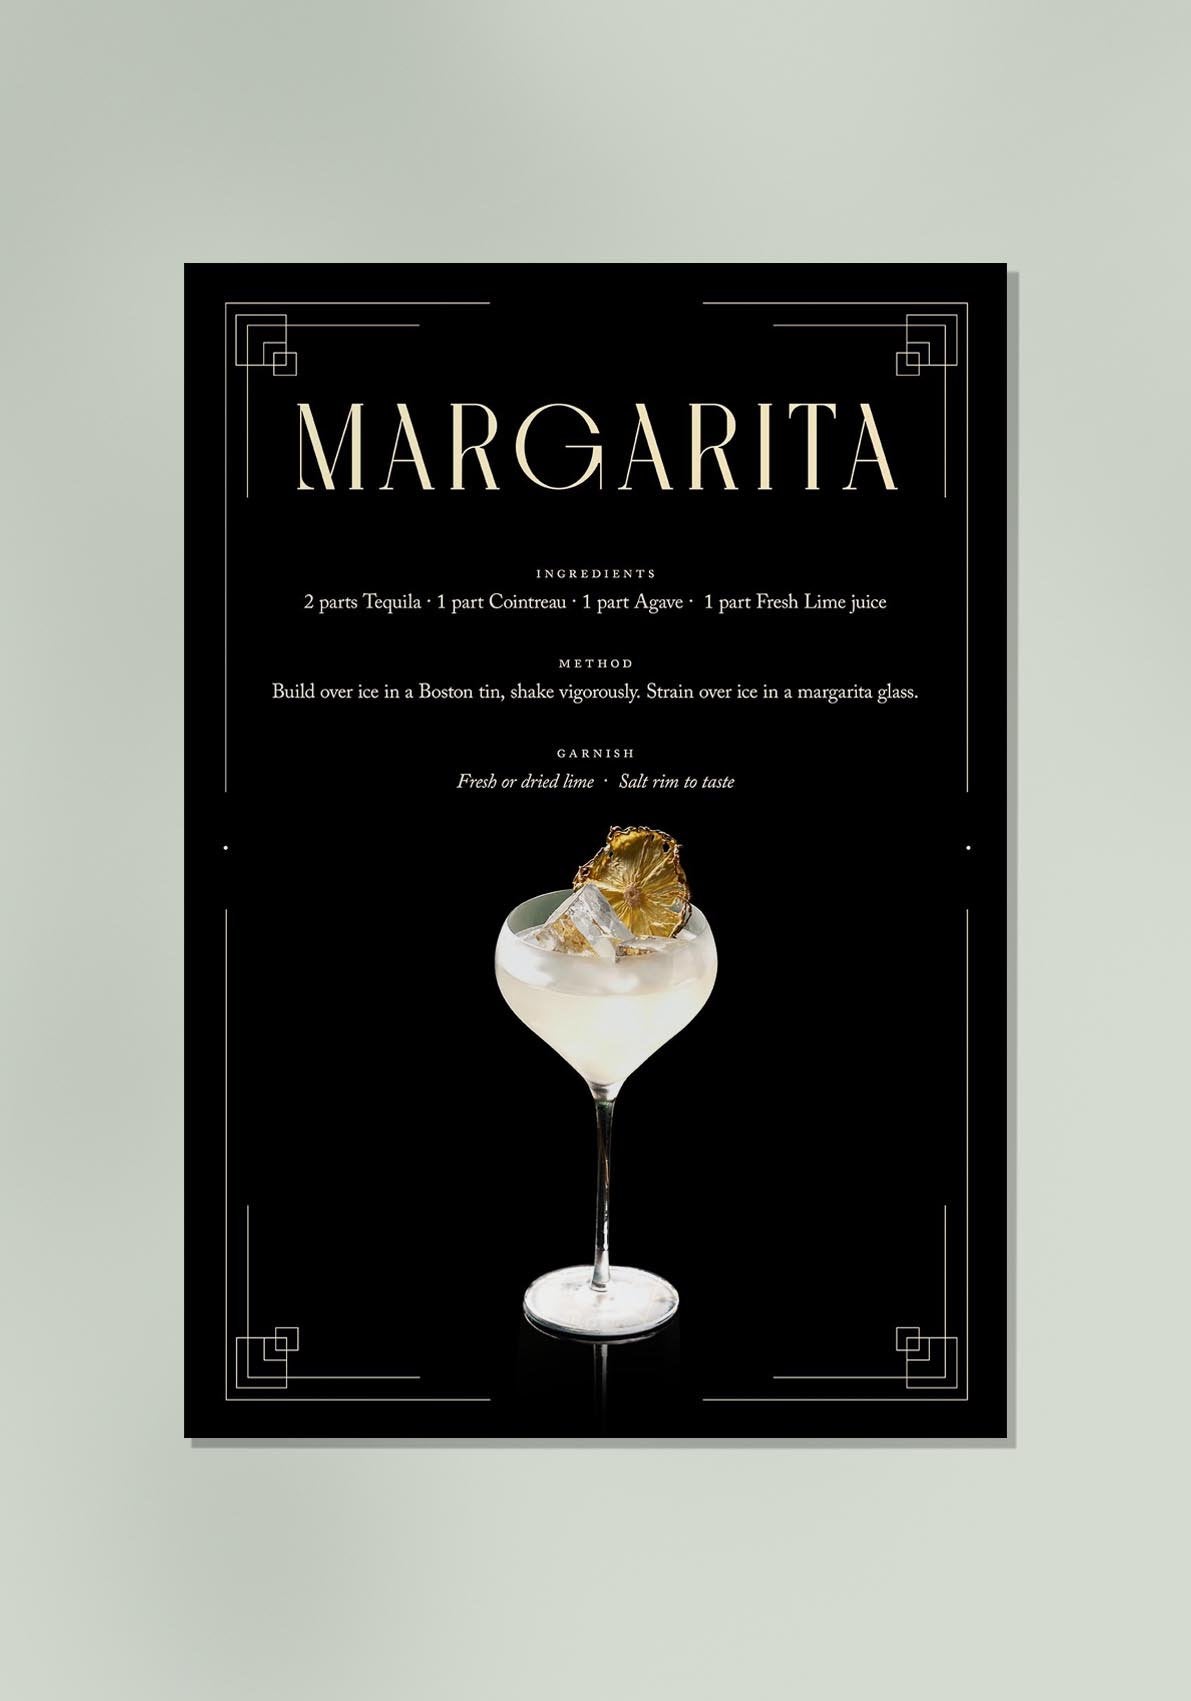 Margarita Cocktail Recipe Poster